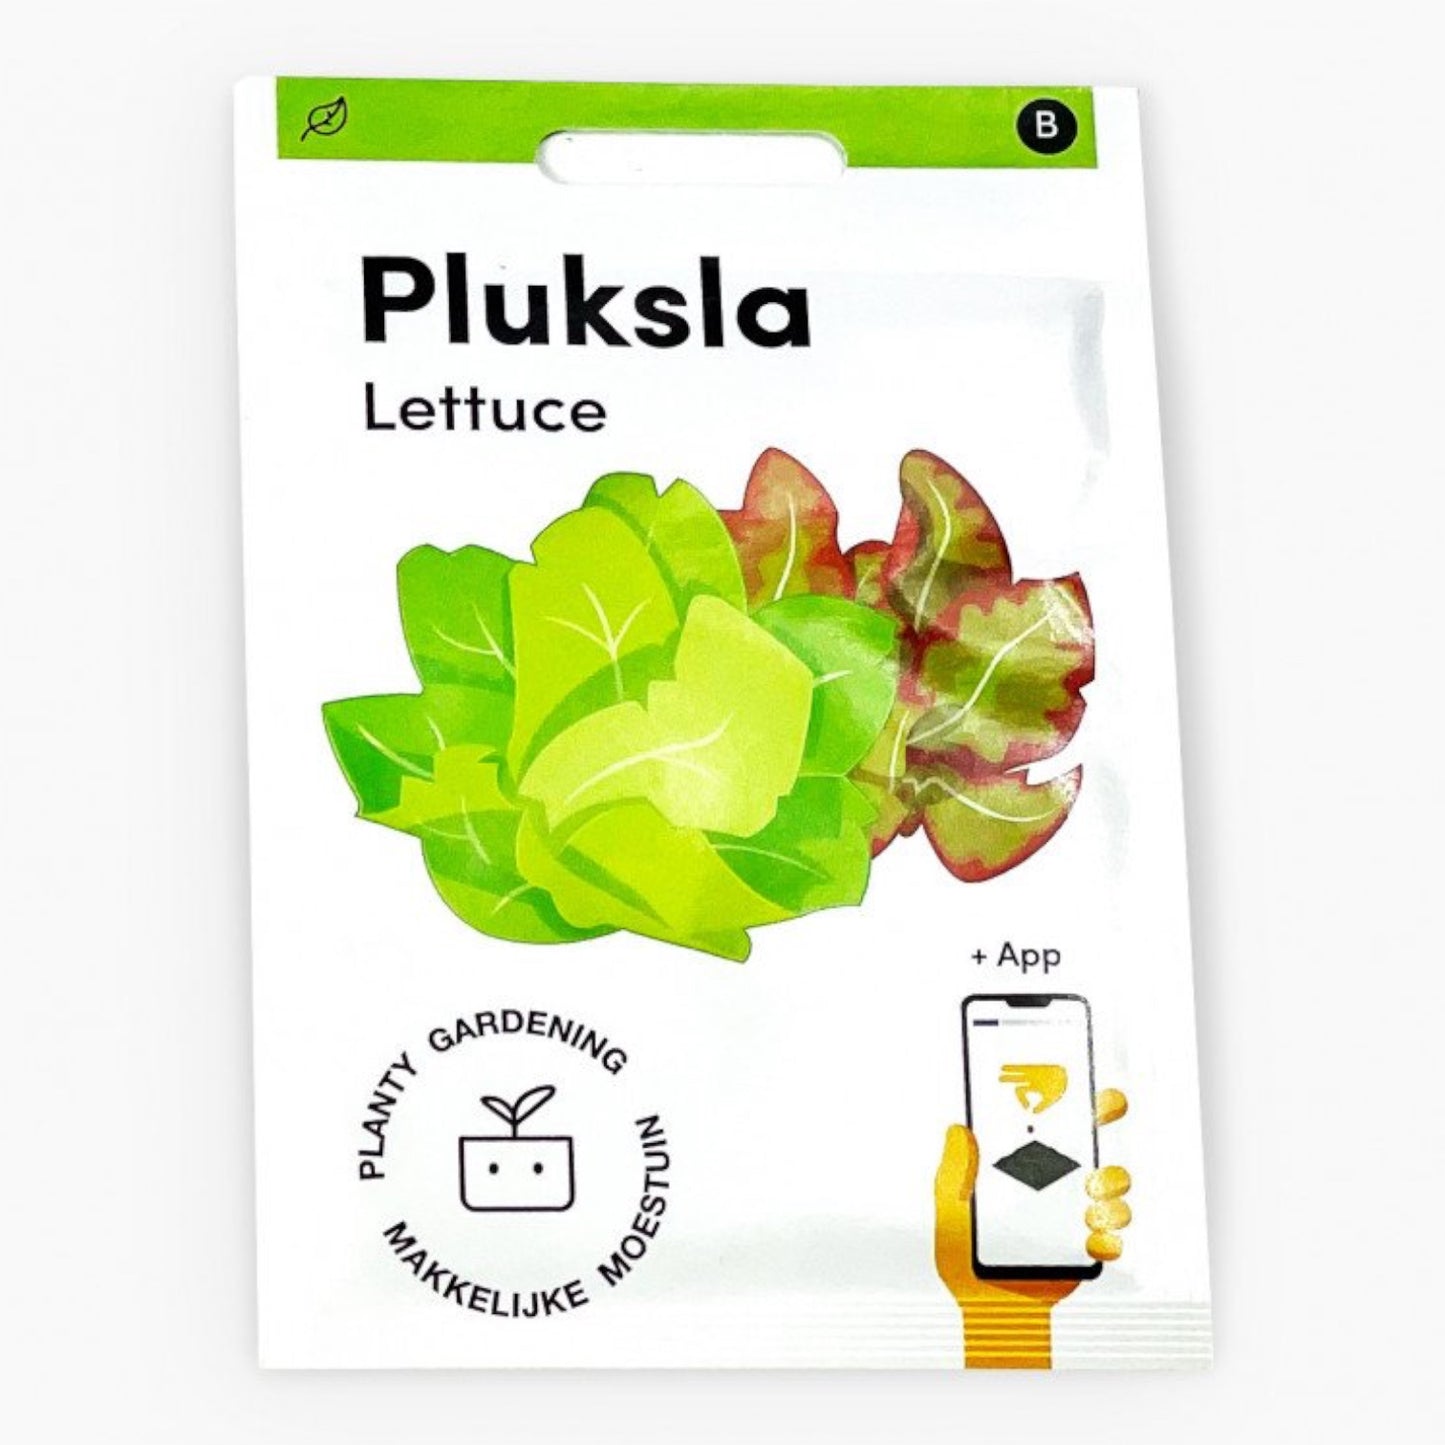 Pick lettuce